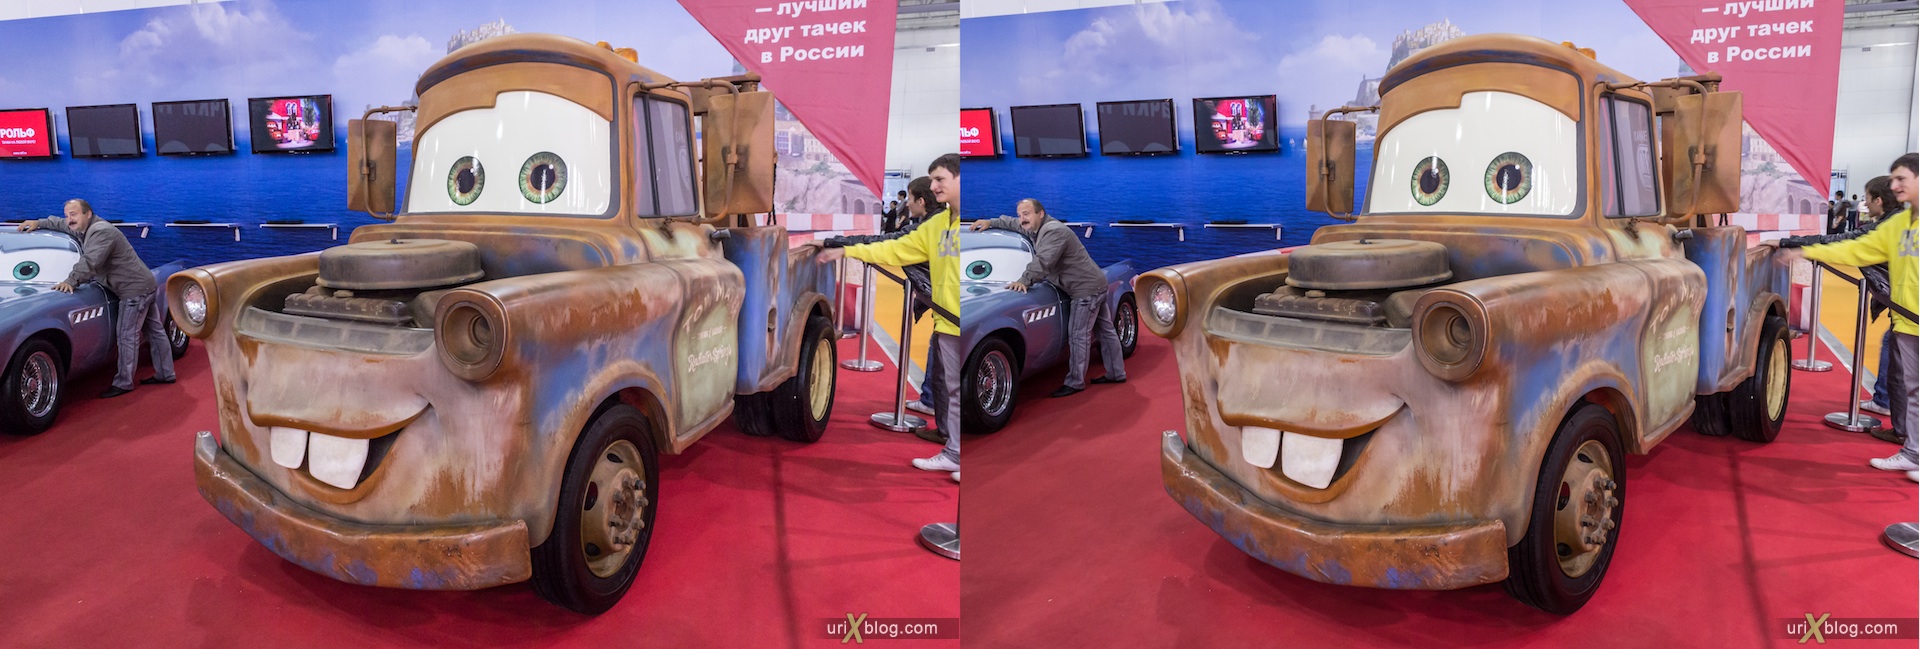 2012, Тачки, мультик, Moscow International Automobile Salon, auto show, 3D, stereo pair, cross-eyed, crossview